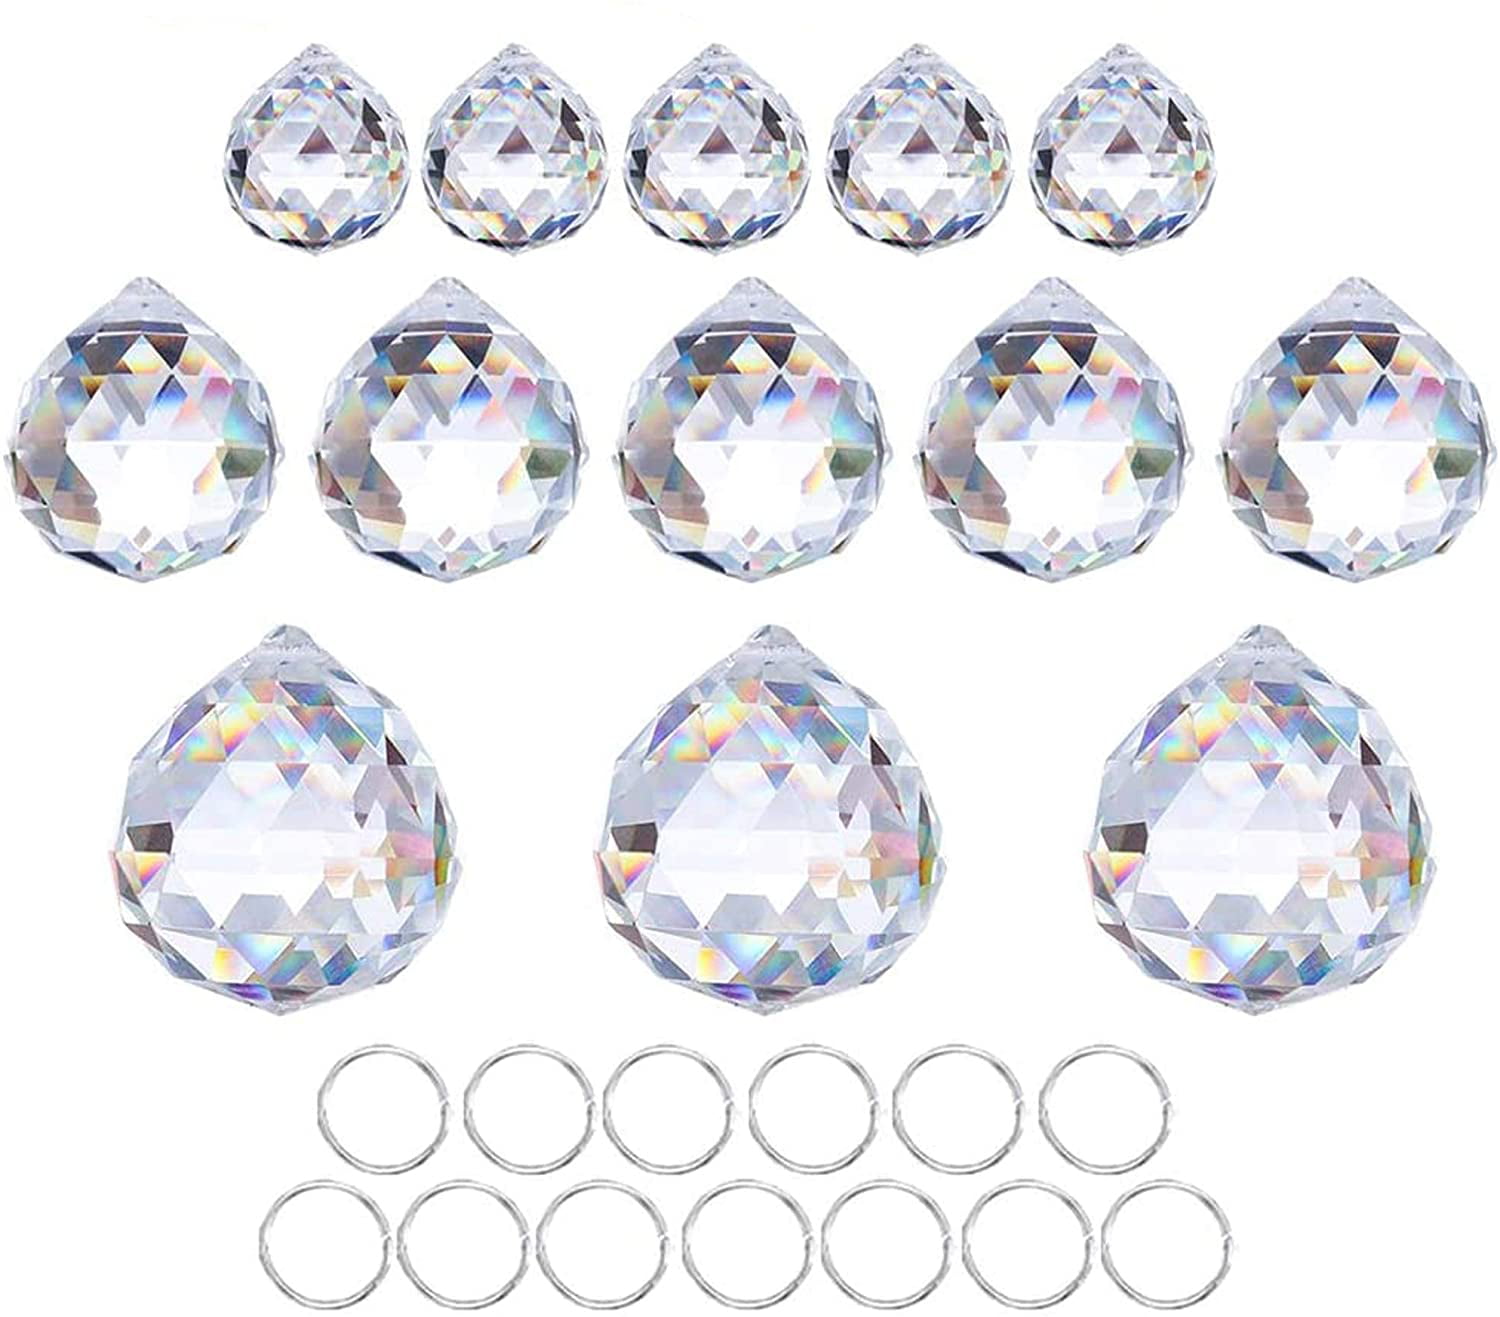 H&D Crystal Chandelier Ball Prism Ceiling Lamp Wedding Decor Drops Pendant 40mm 